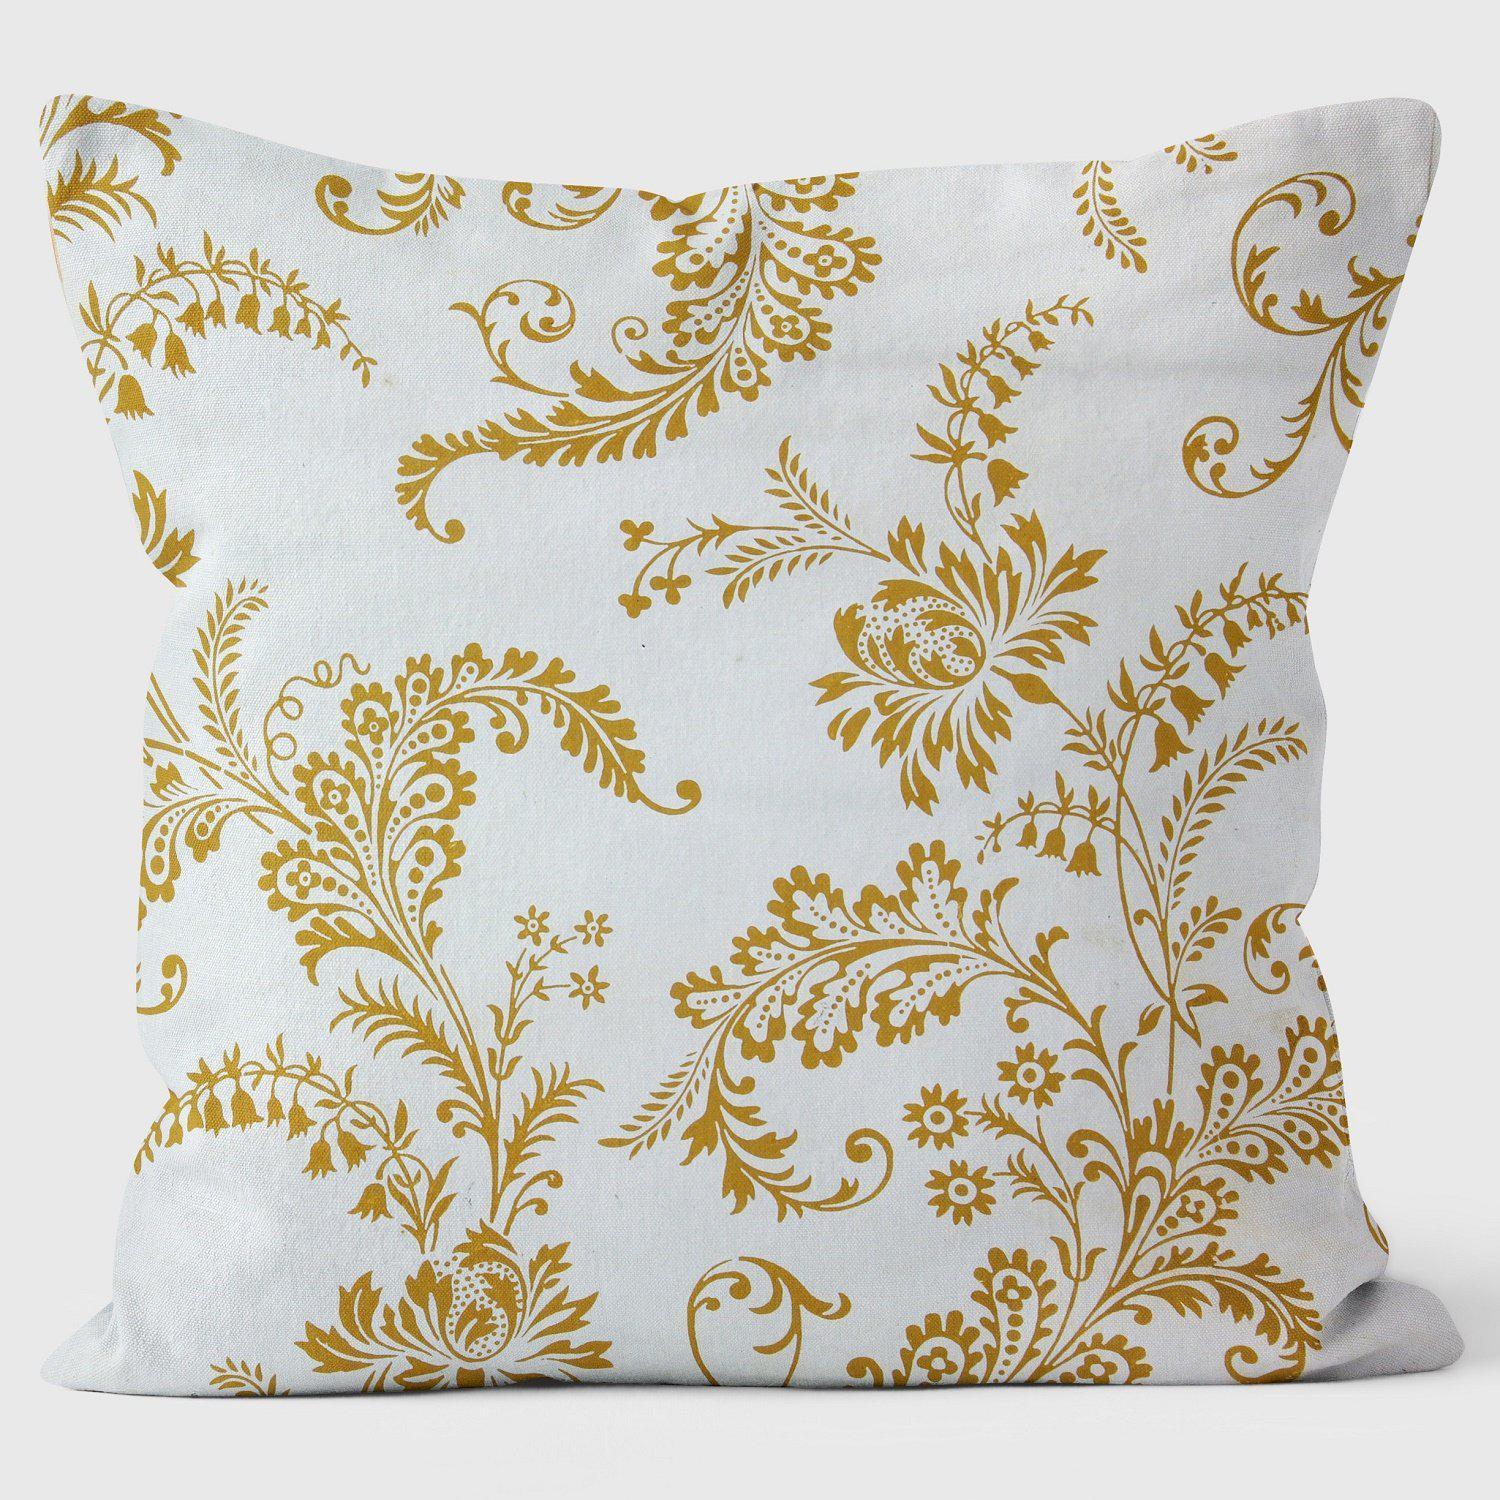 Leaf & Fern - Mary Evans Cushion - Handmade Cushions UK - WeLoveCushions